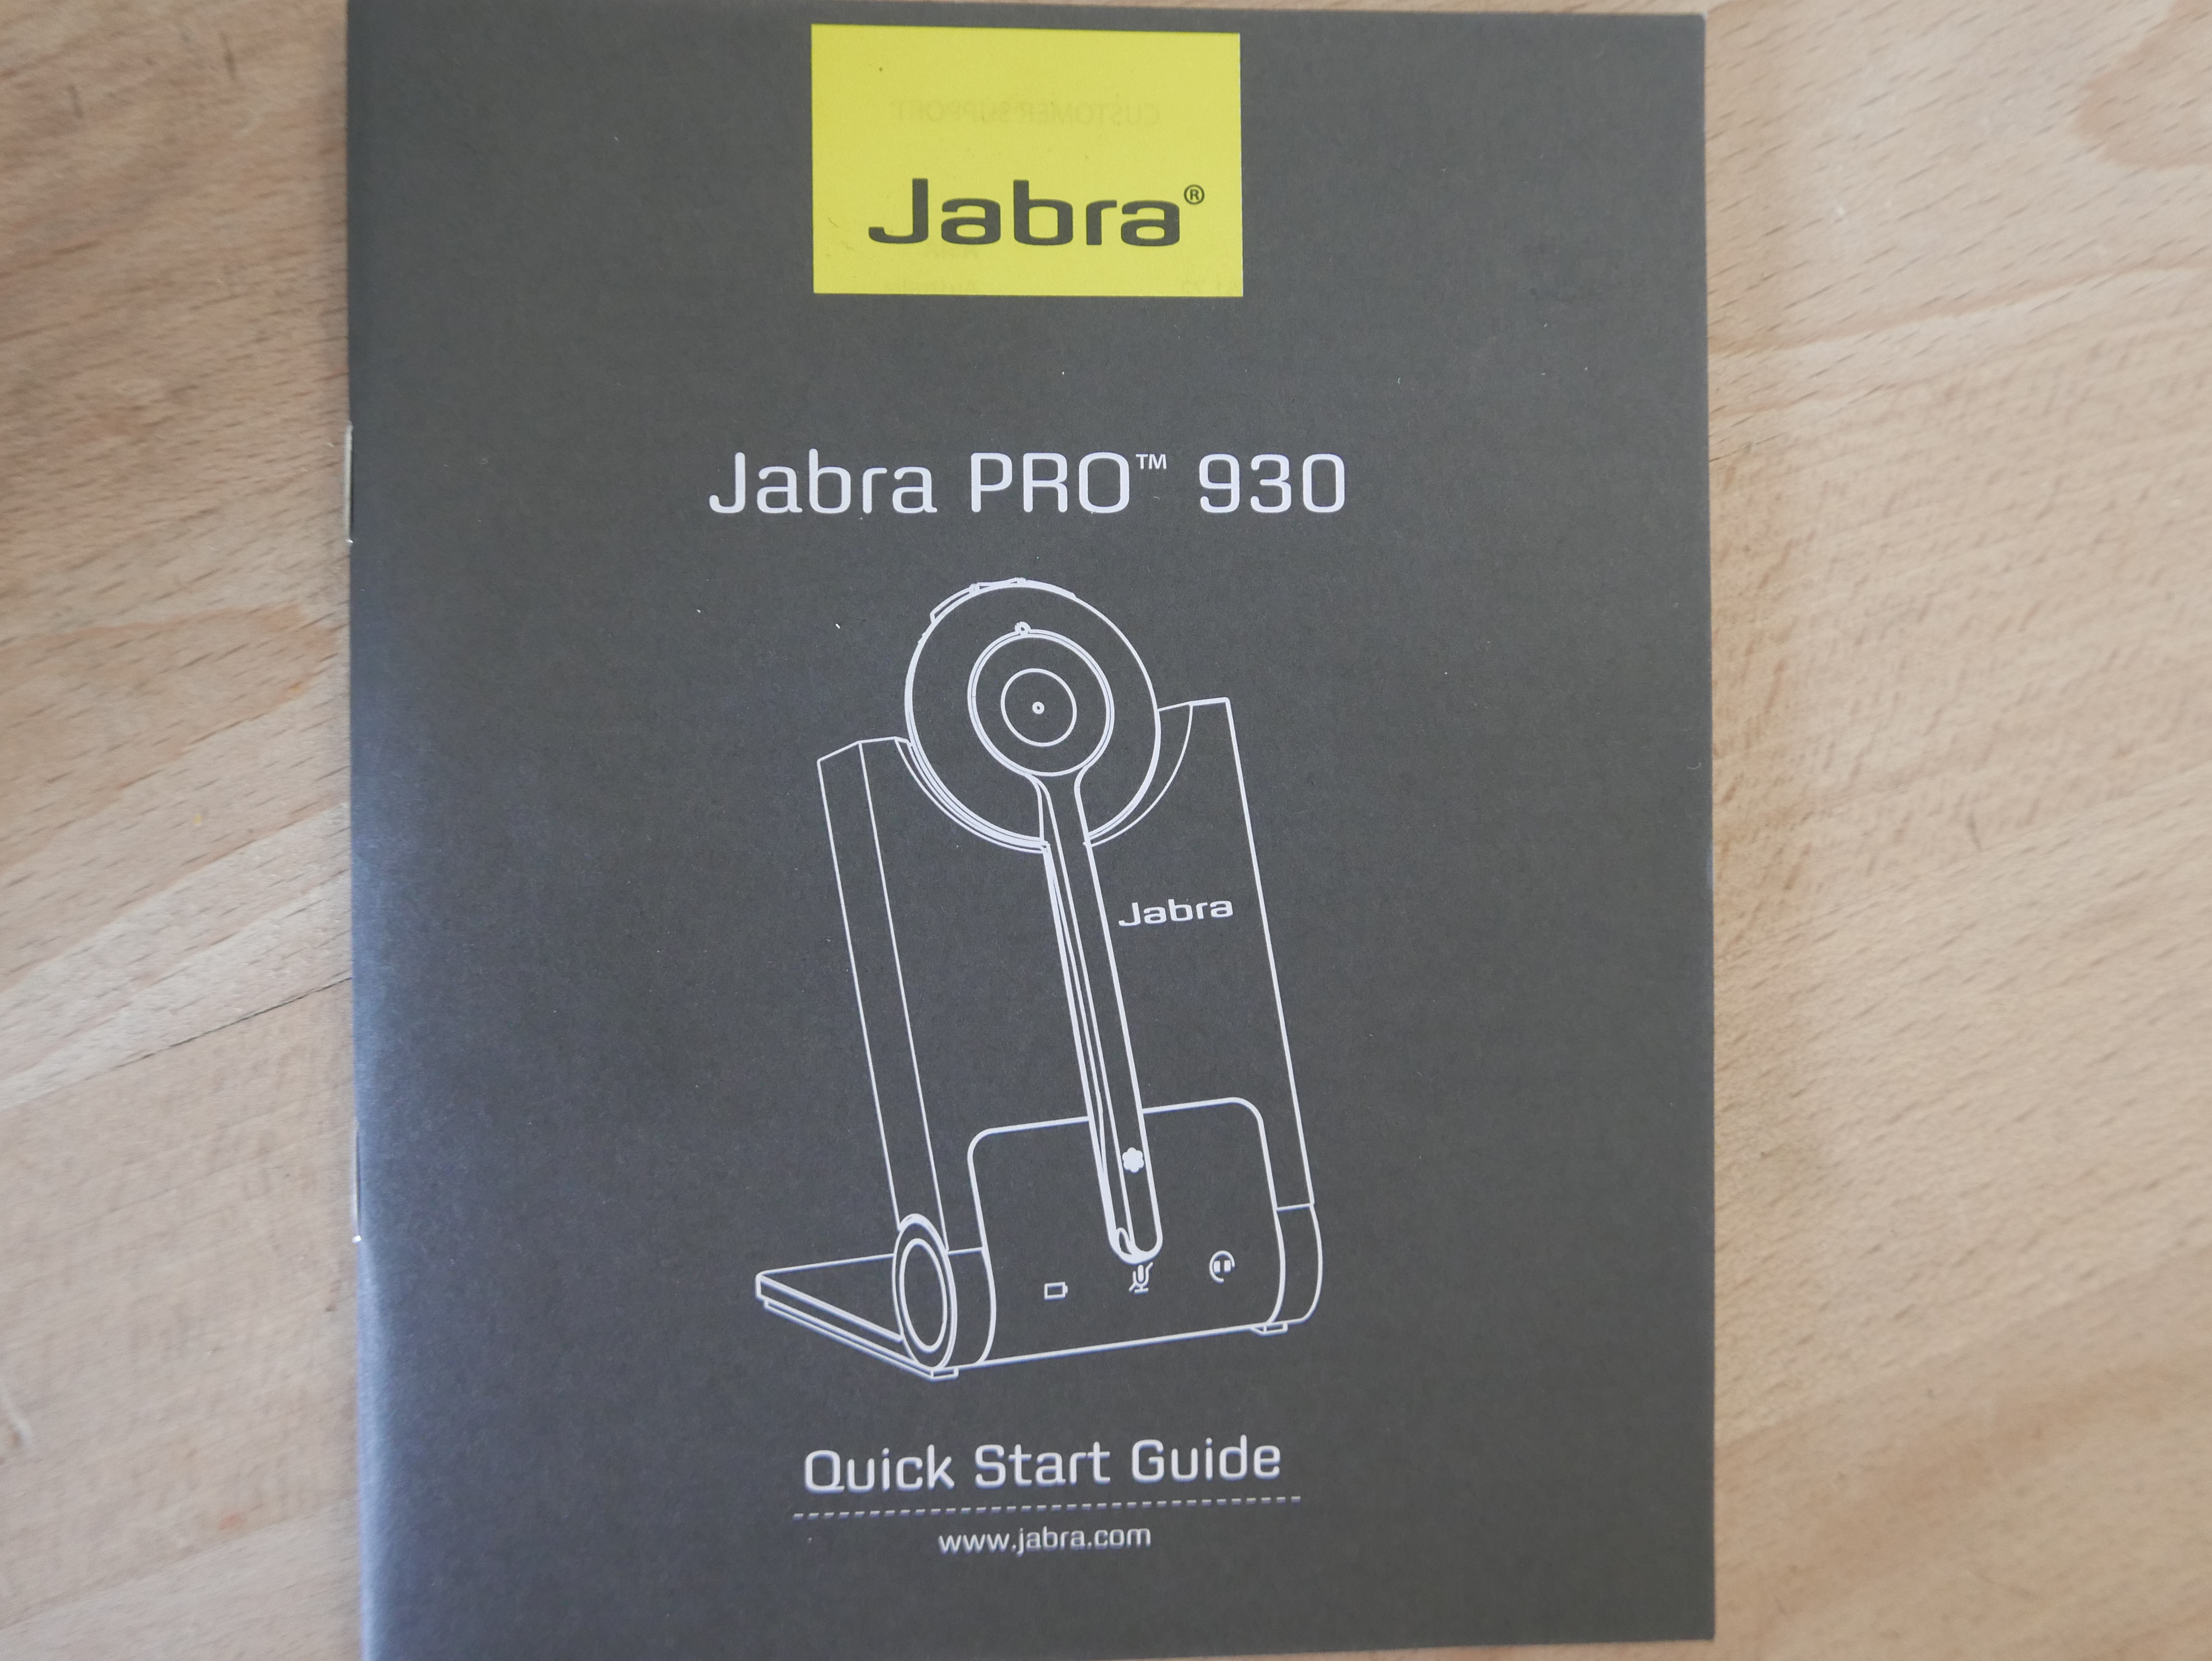 Jabra Pro 930 headset